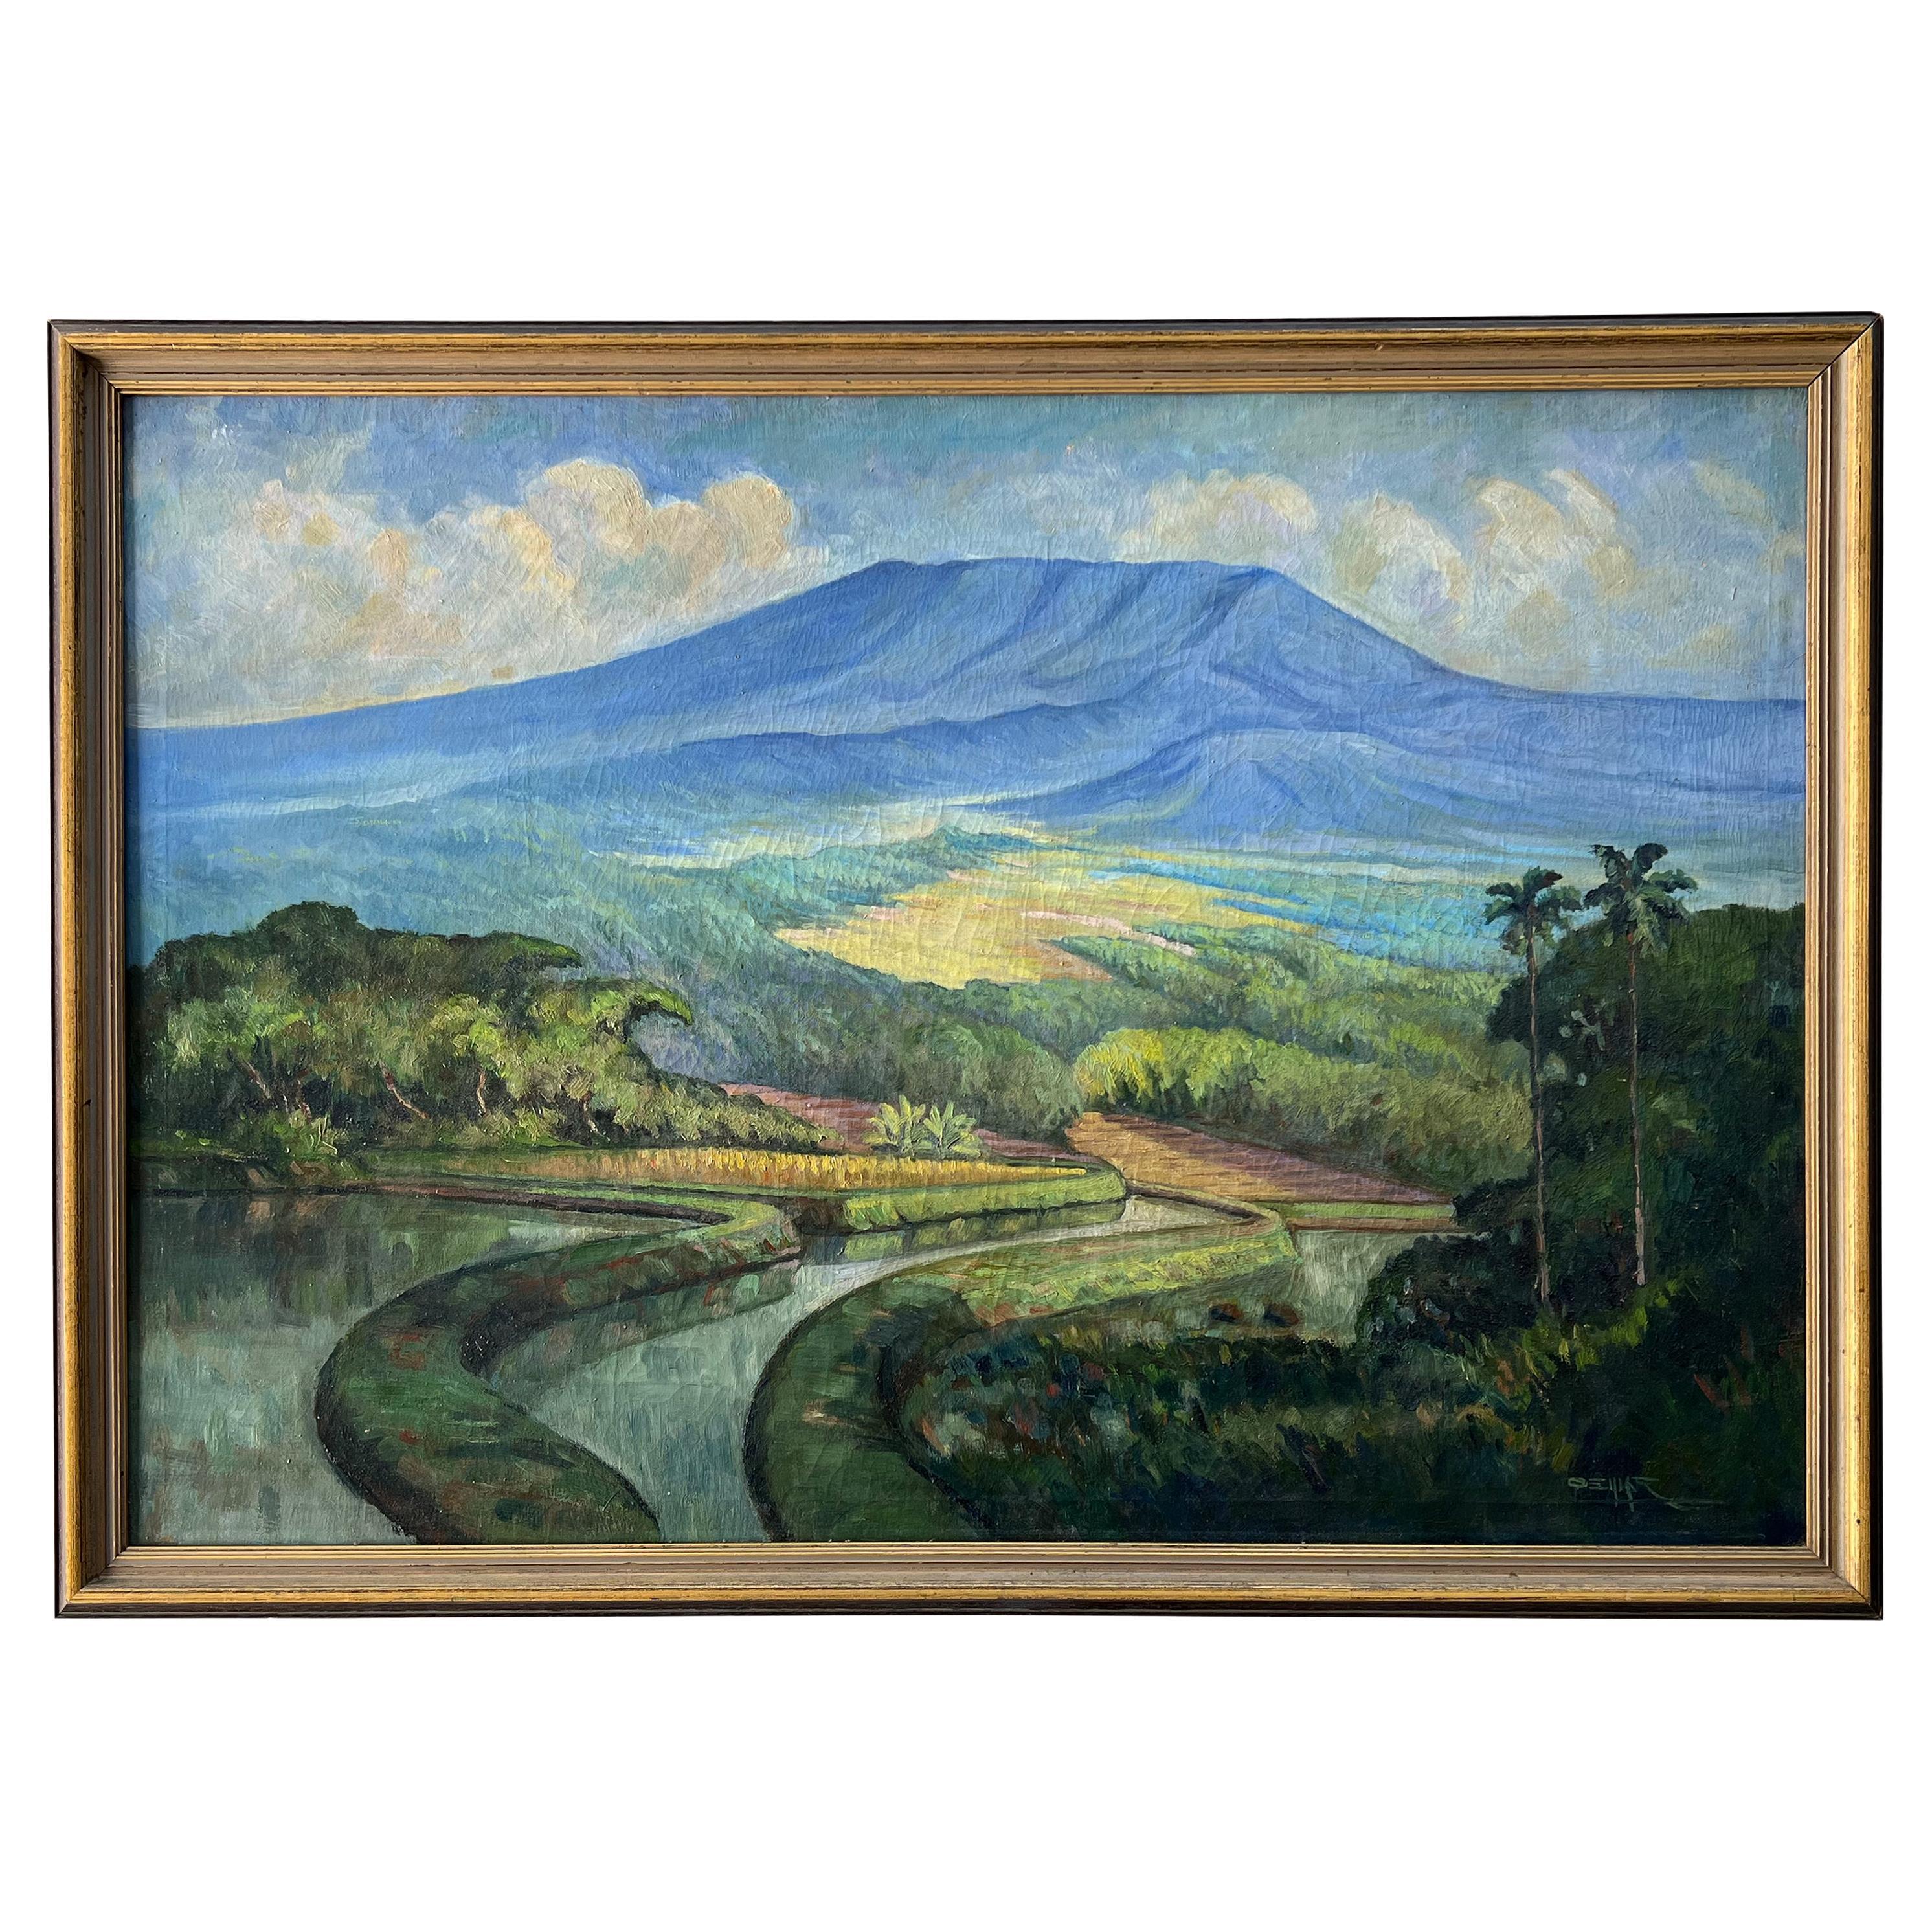 Rice Fields on Bali - Oil on canvas